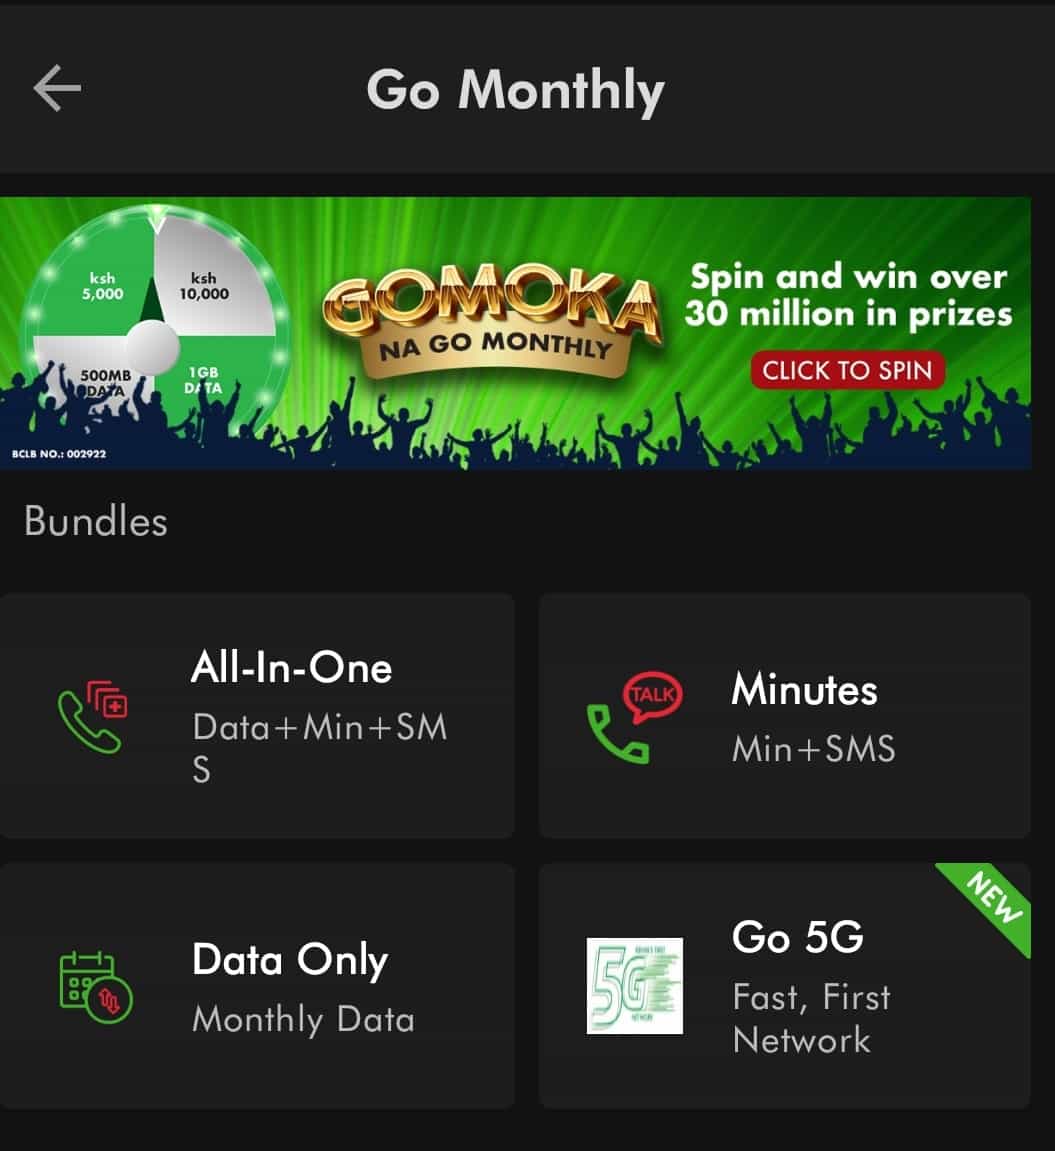 Safaricom Go Monthly